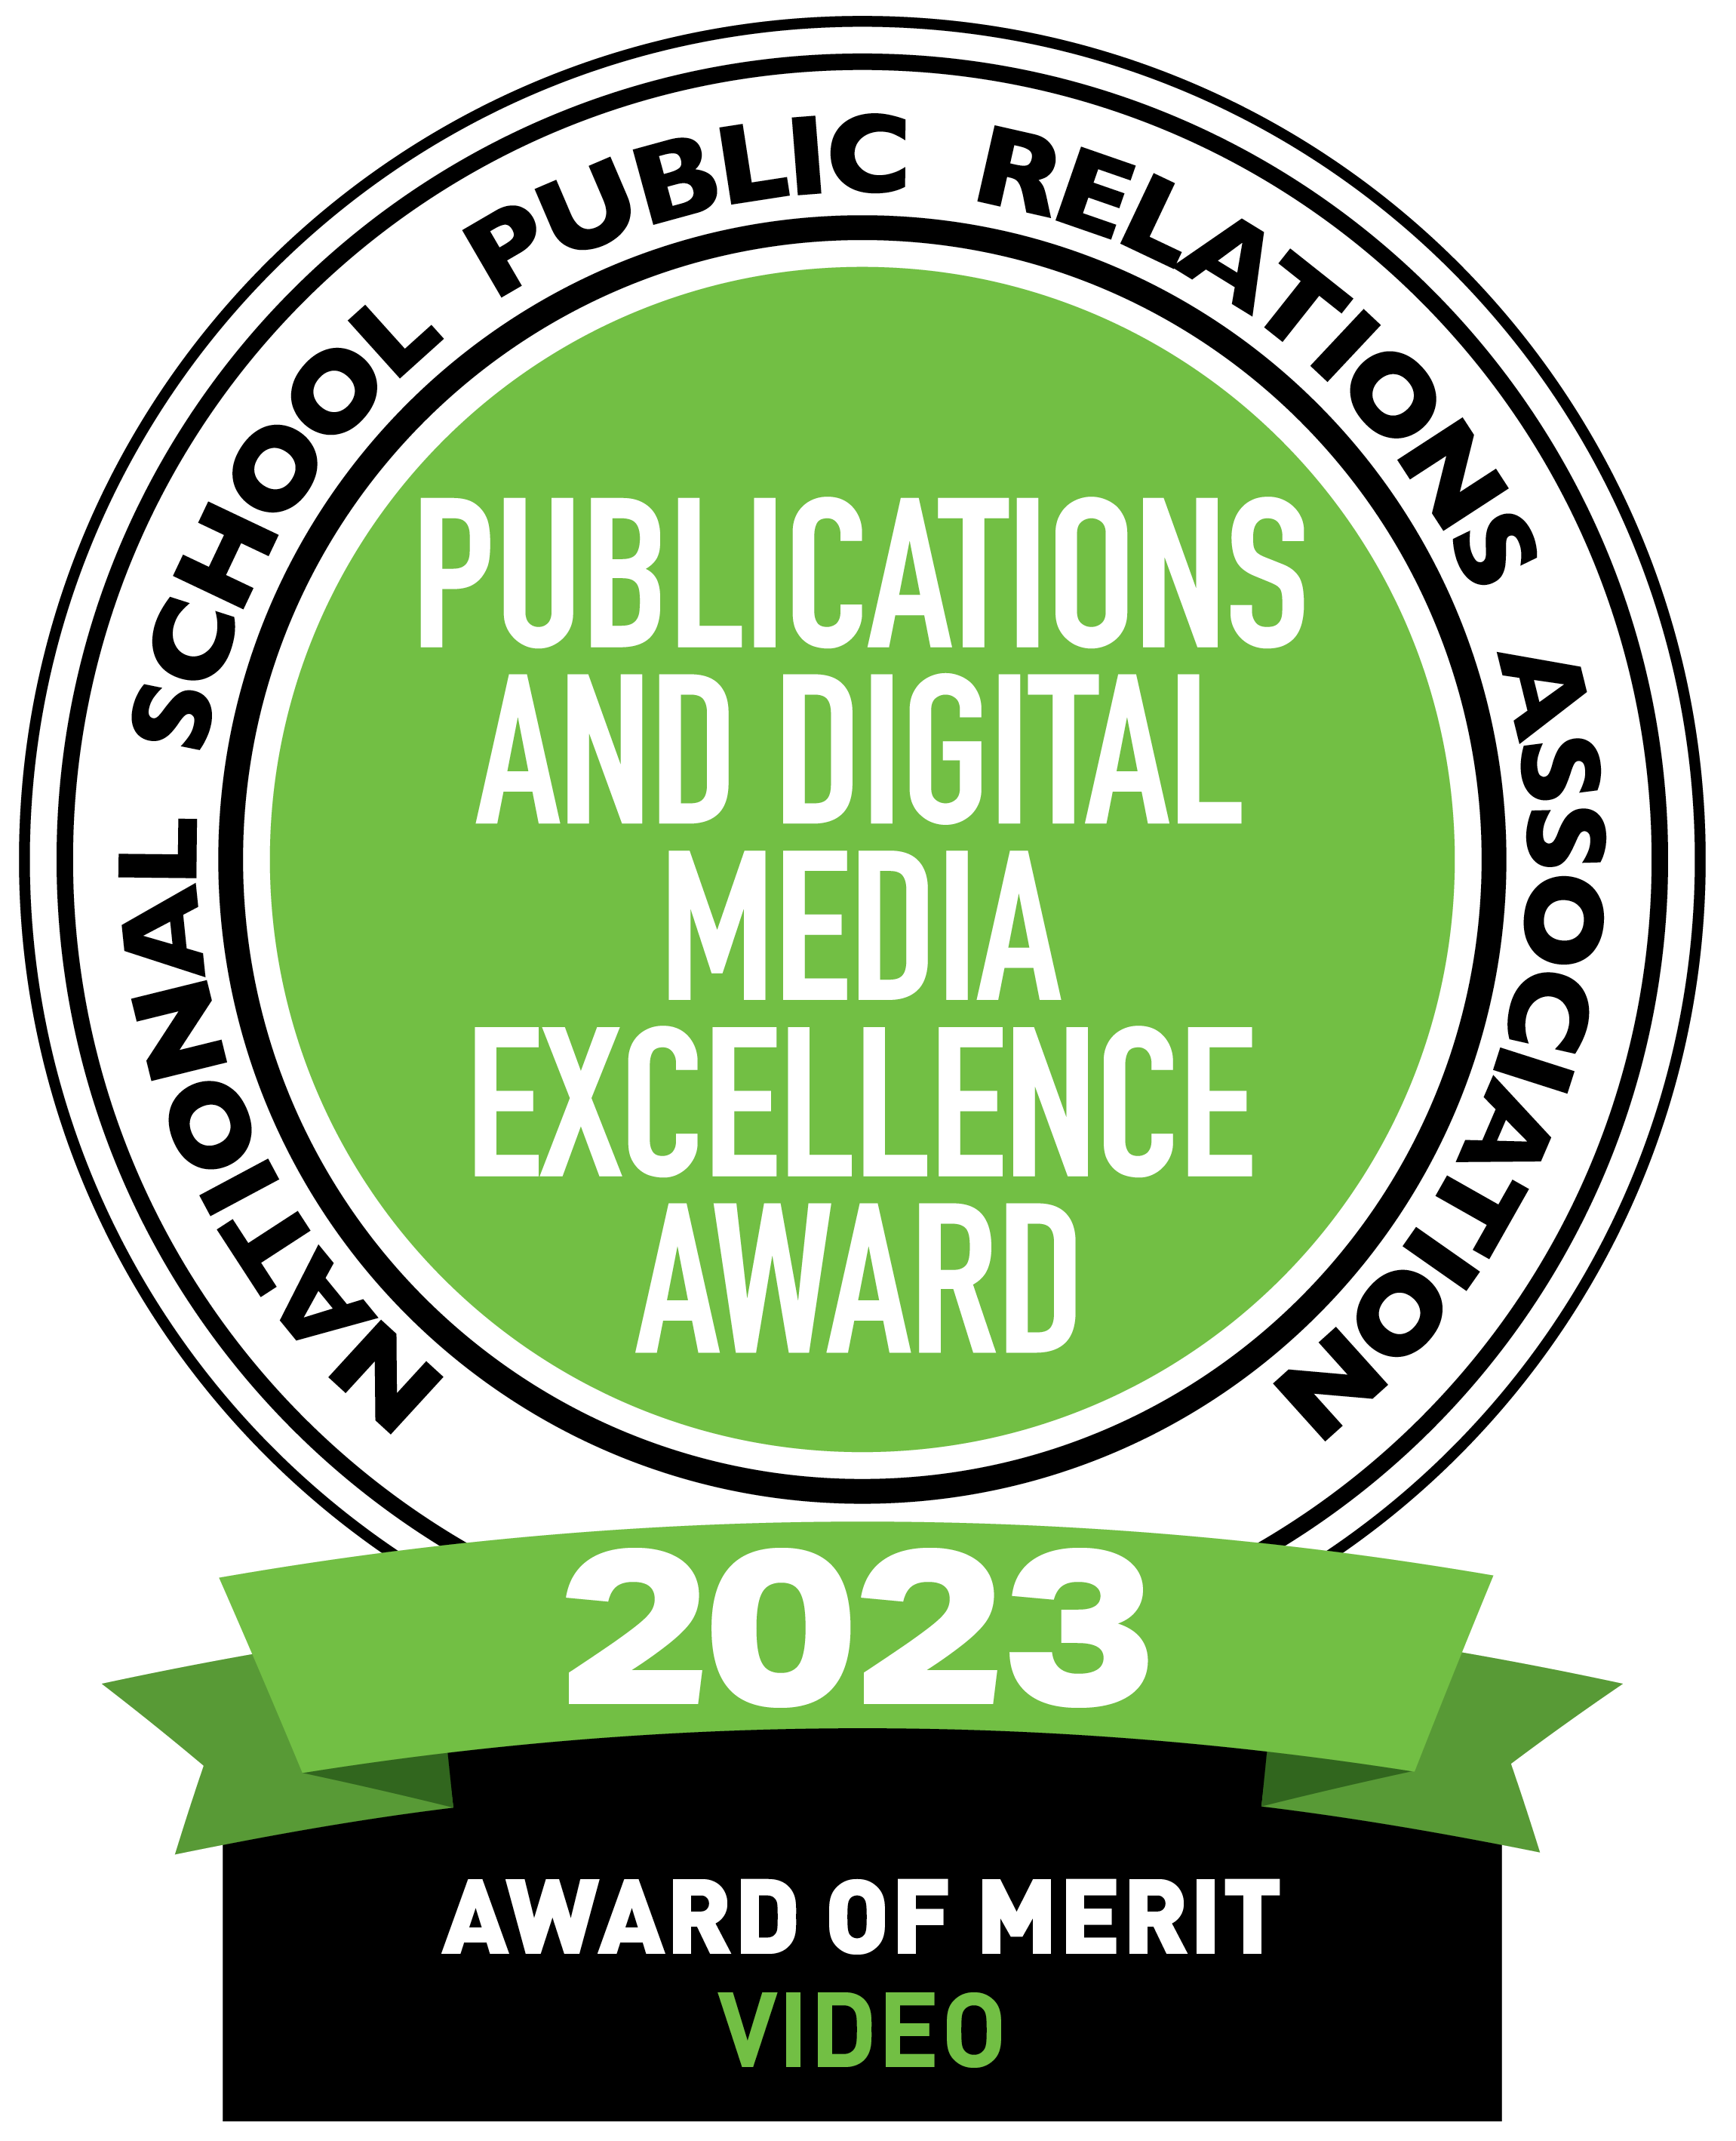 Award of Merit video logo